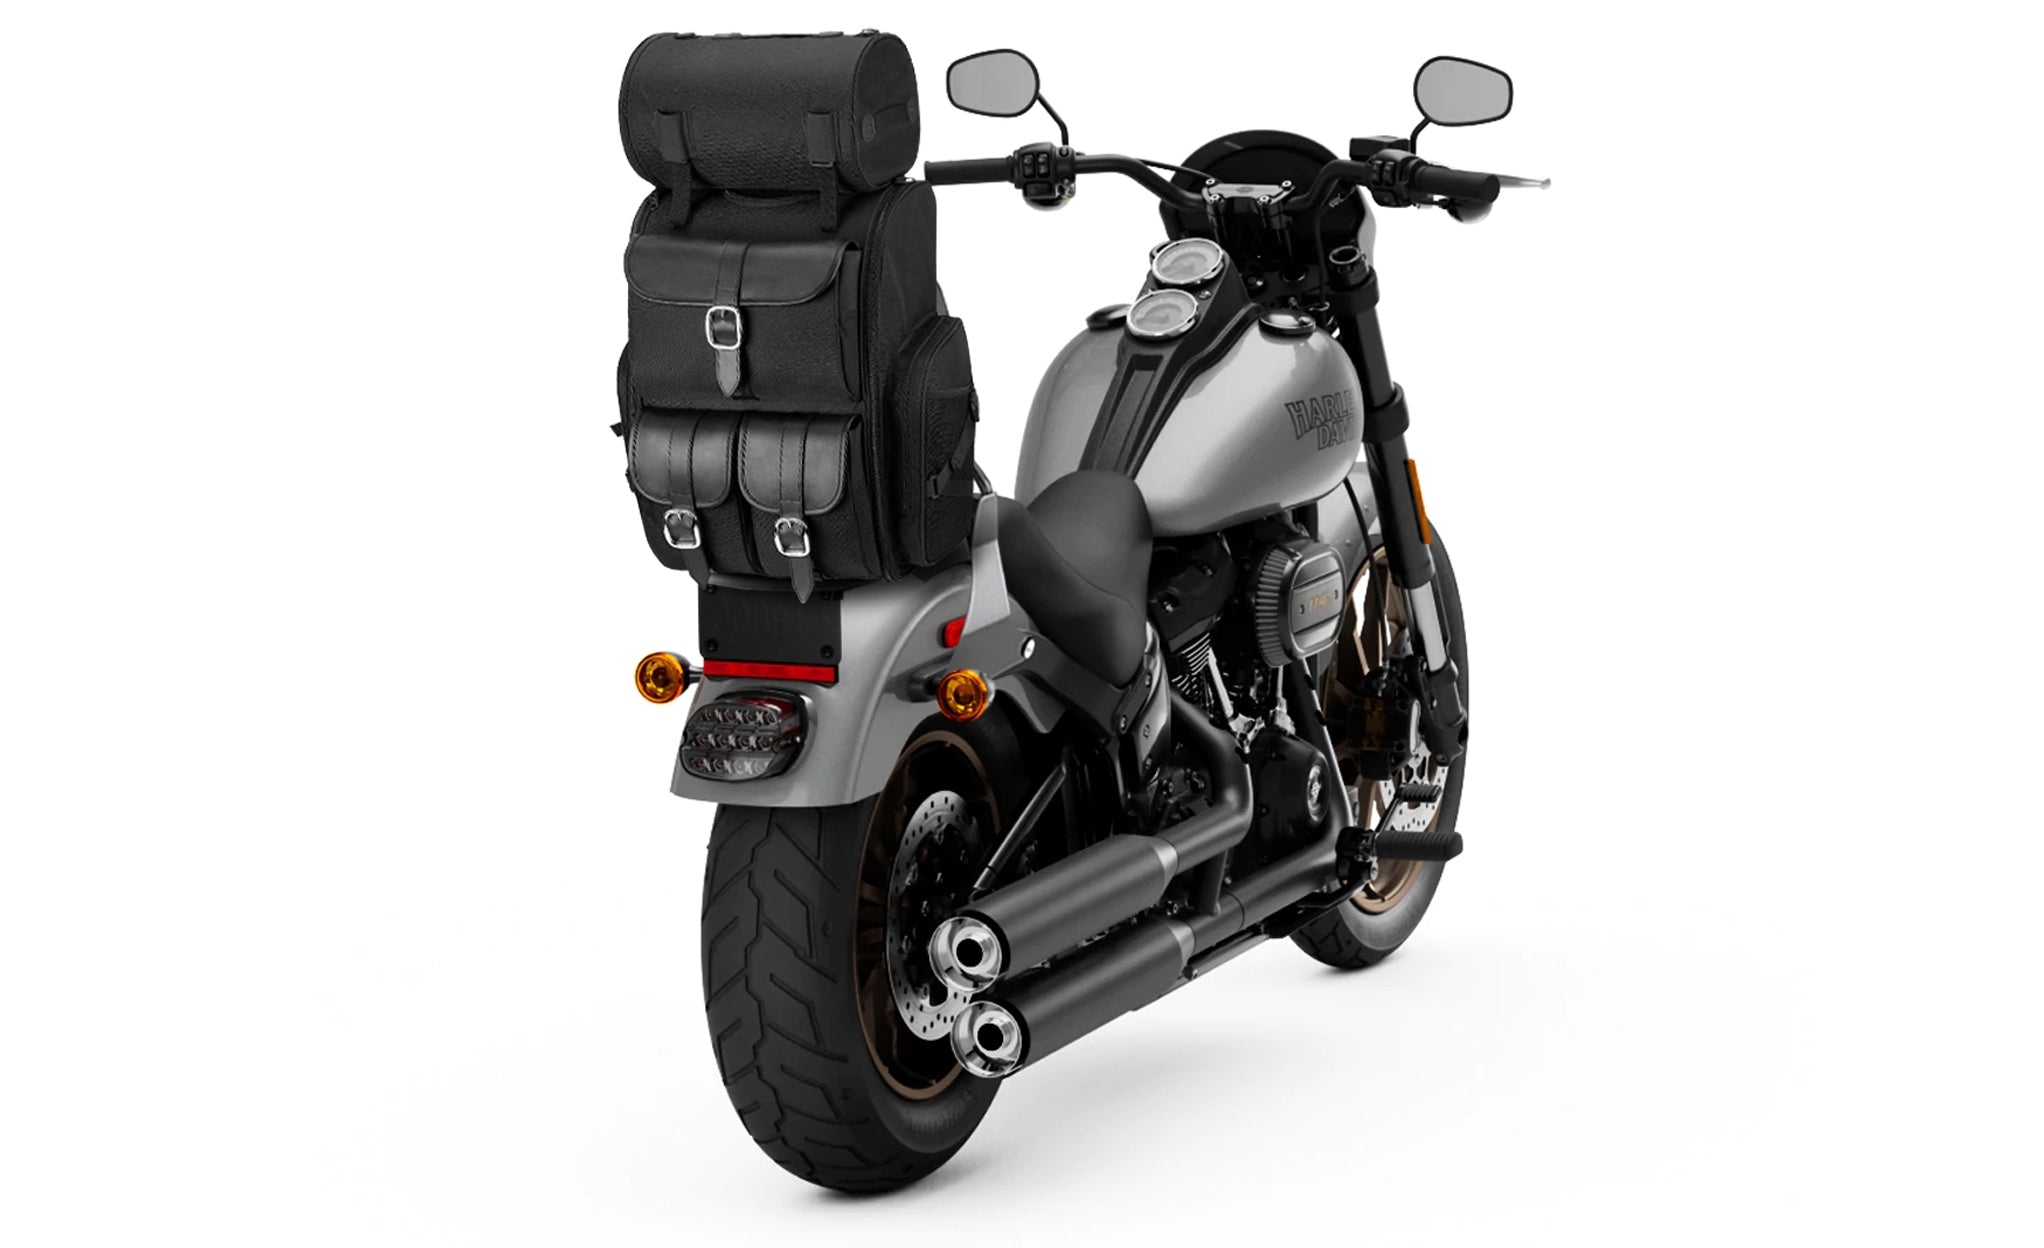 Viking Highway Extra Large Plain Indian Motorcycle Sissy Bar Bag Bag on Bike View @expand